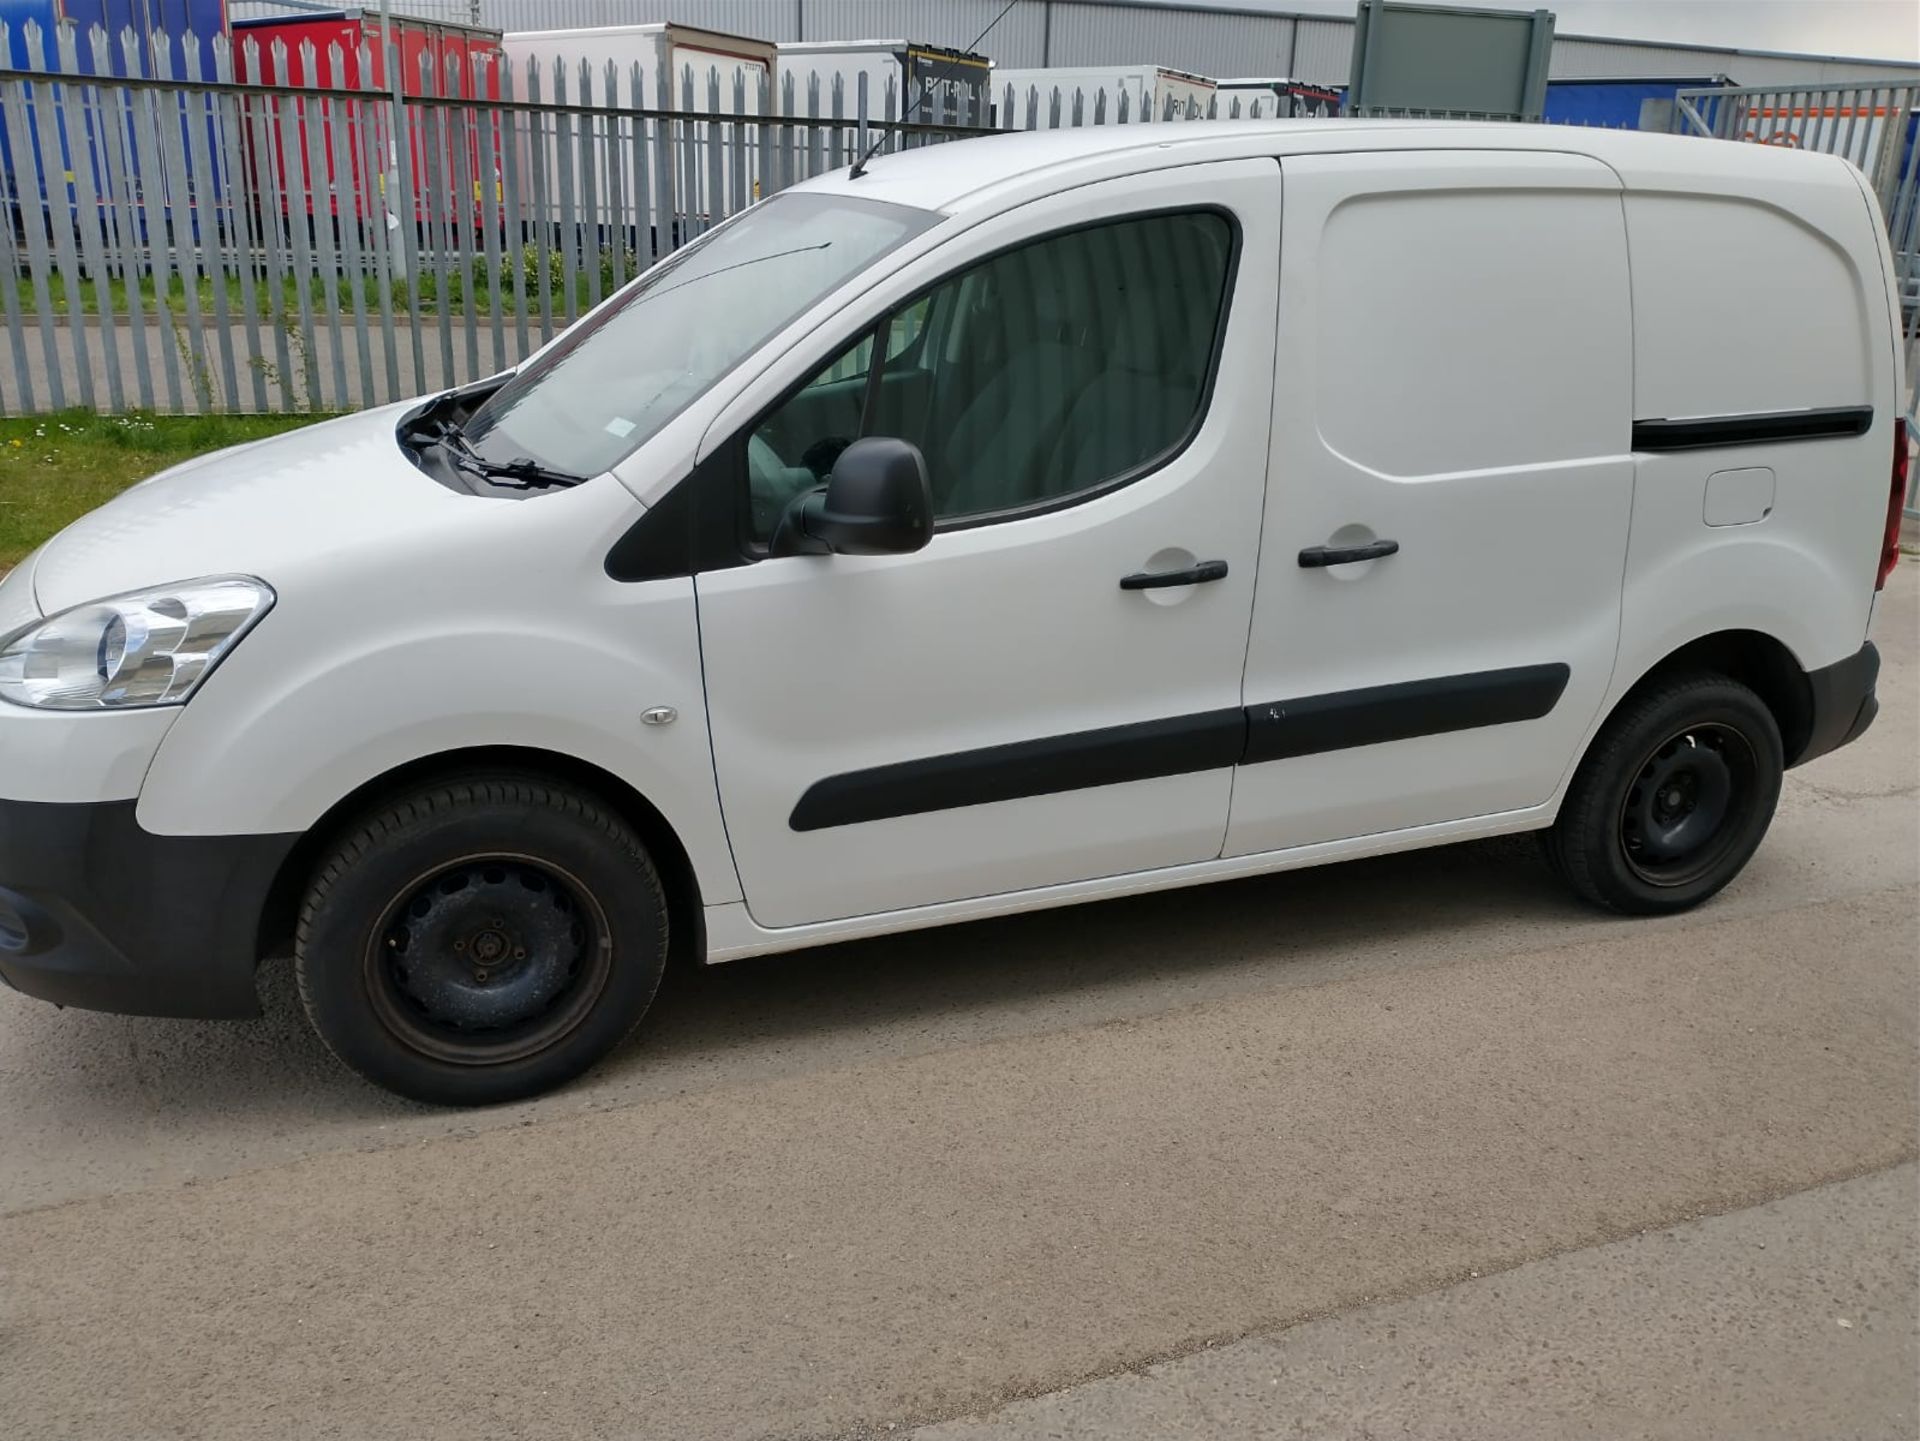 2015 Peugeot Partner Panel Van - CL505 - Location: Corby - Image 5 of 15